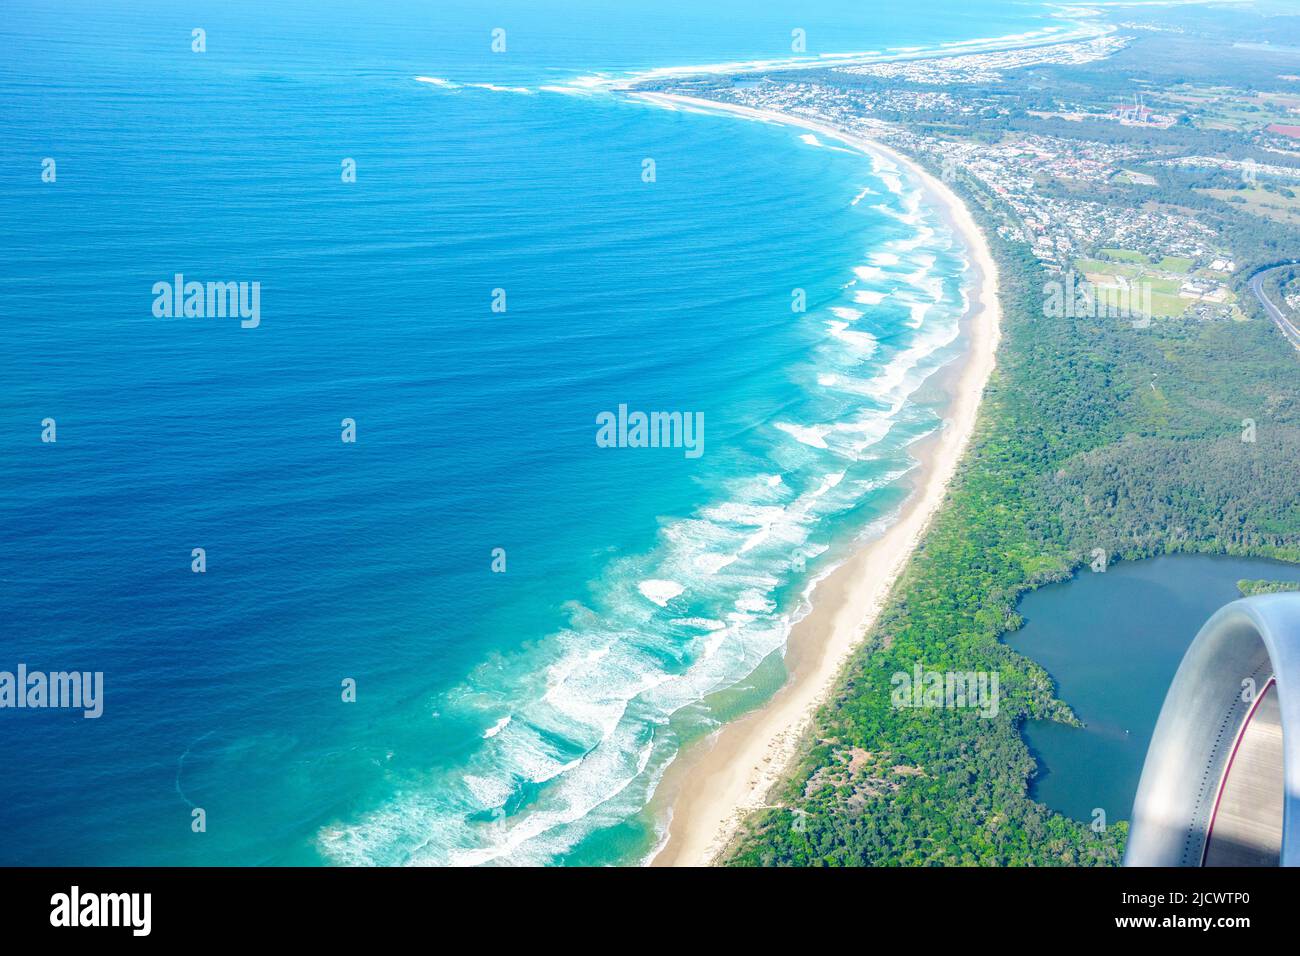 Vista de la playa y de la zona costera en Coolangatta, Queensland Australia. Foto de stock